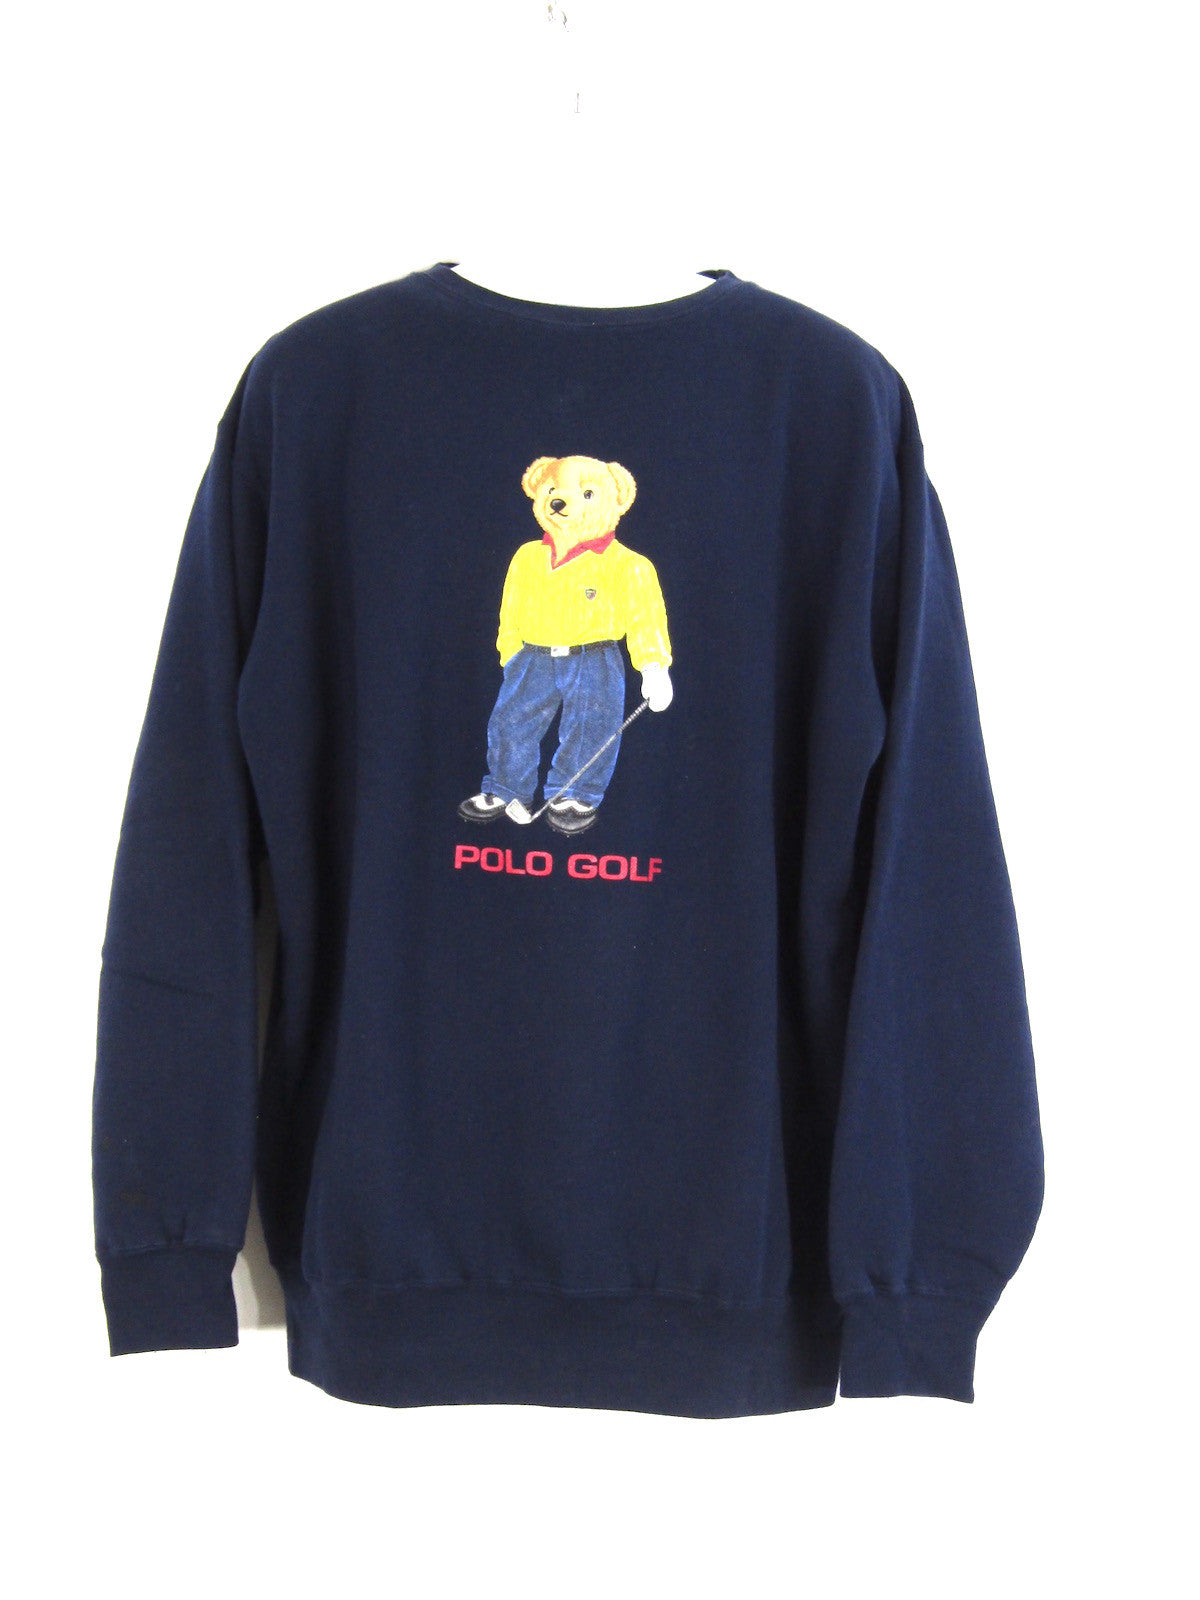 polo golf bear sweater